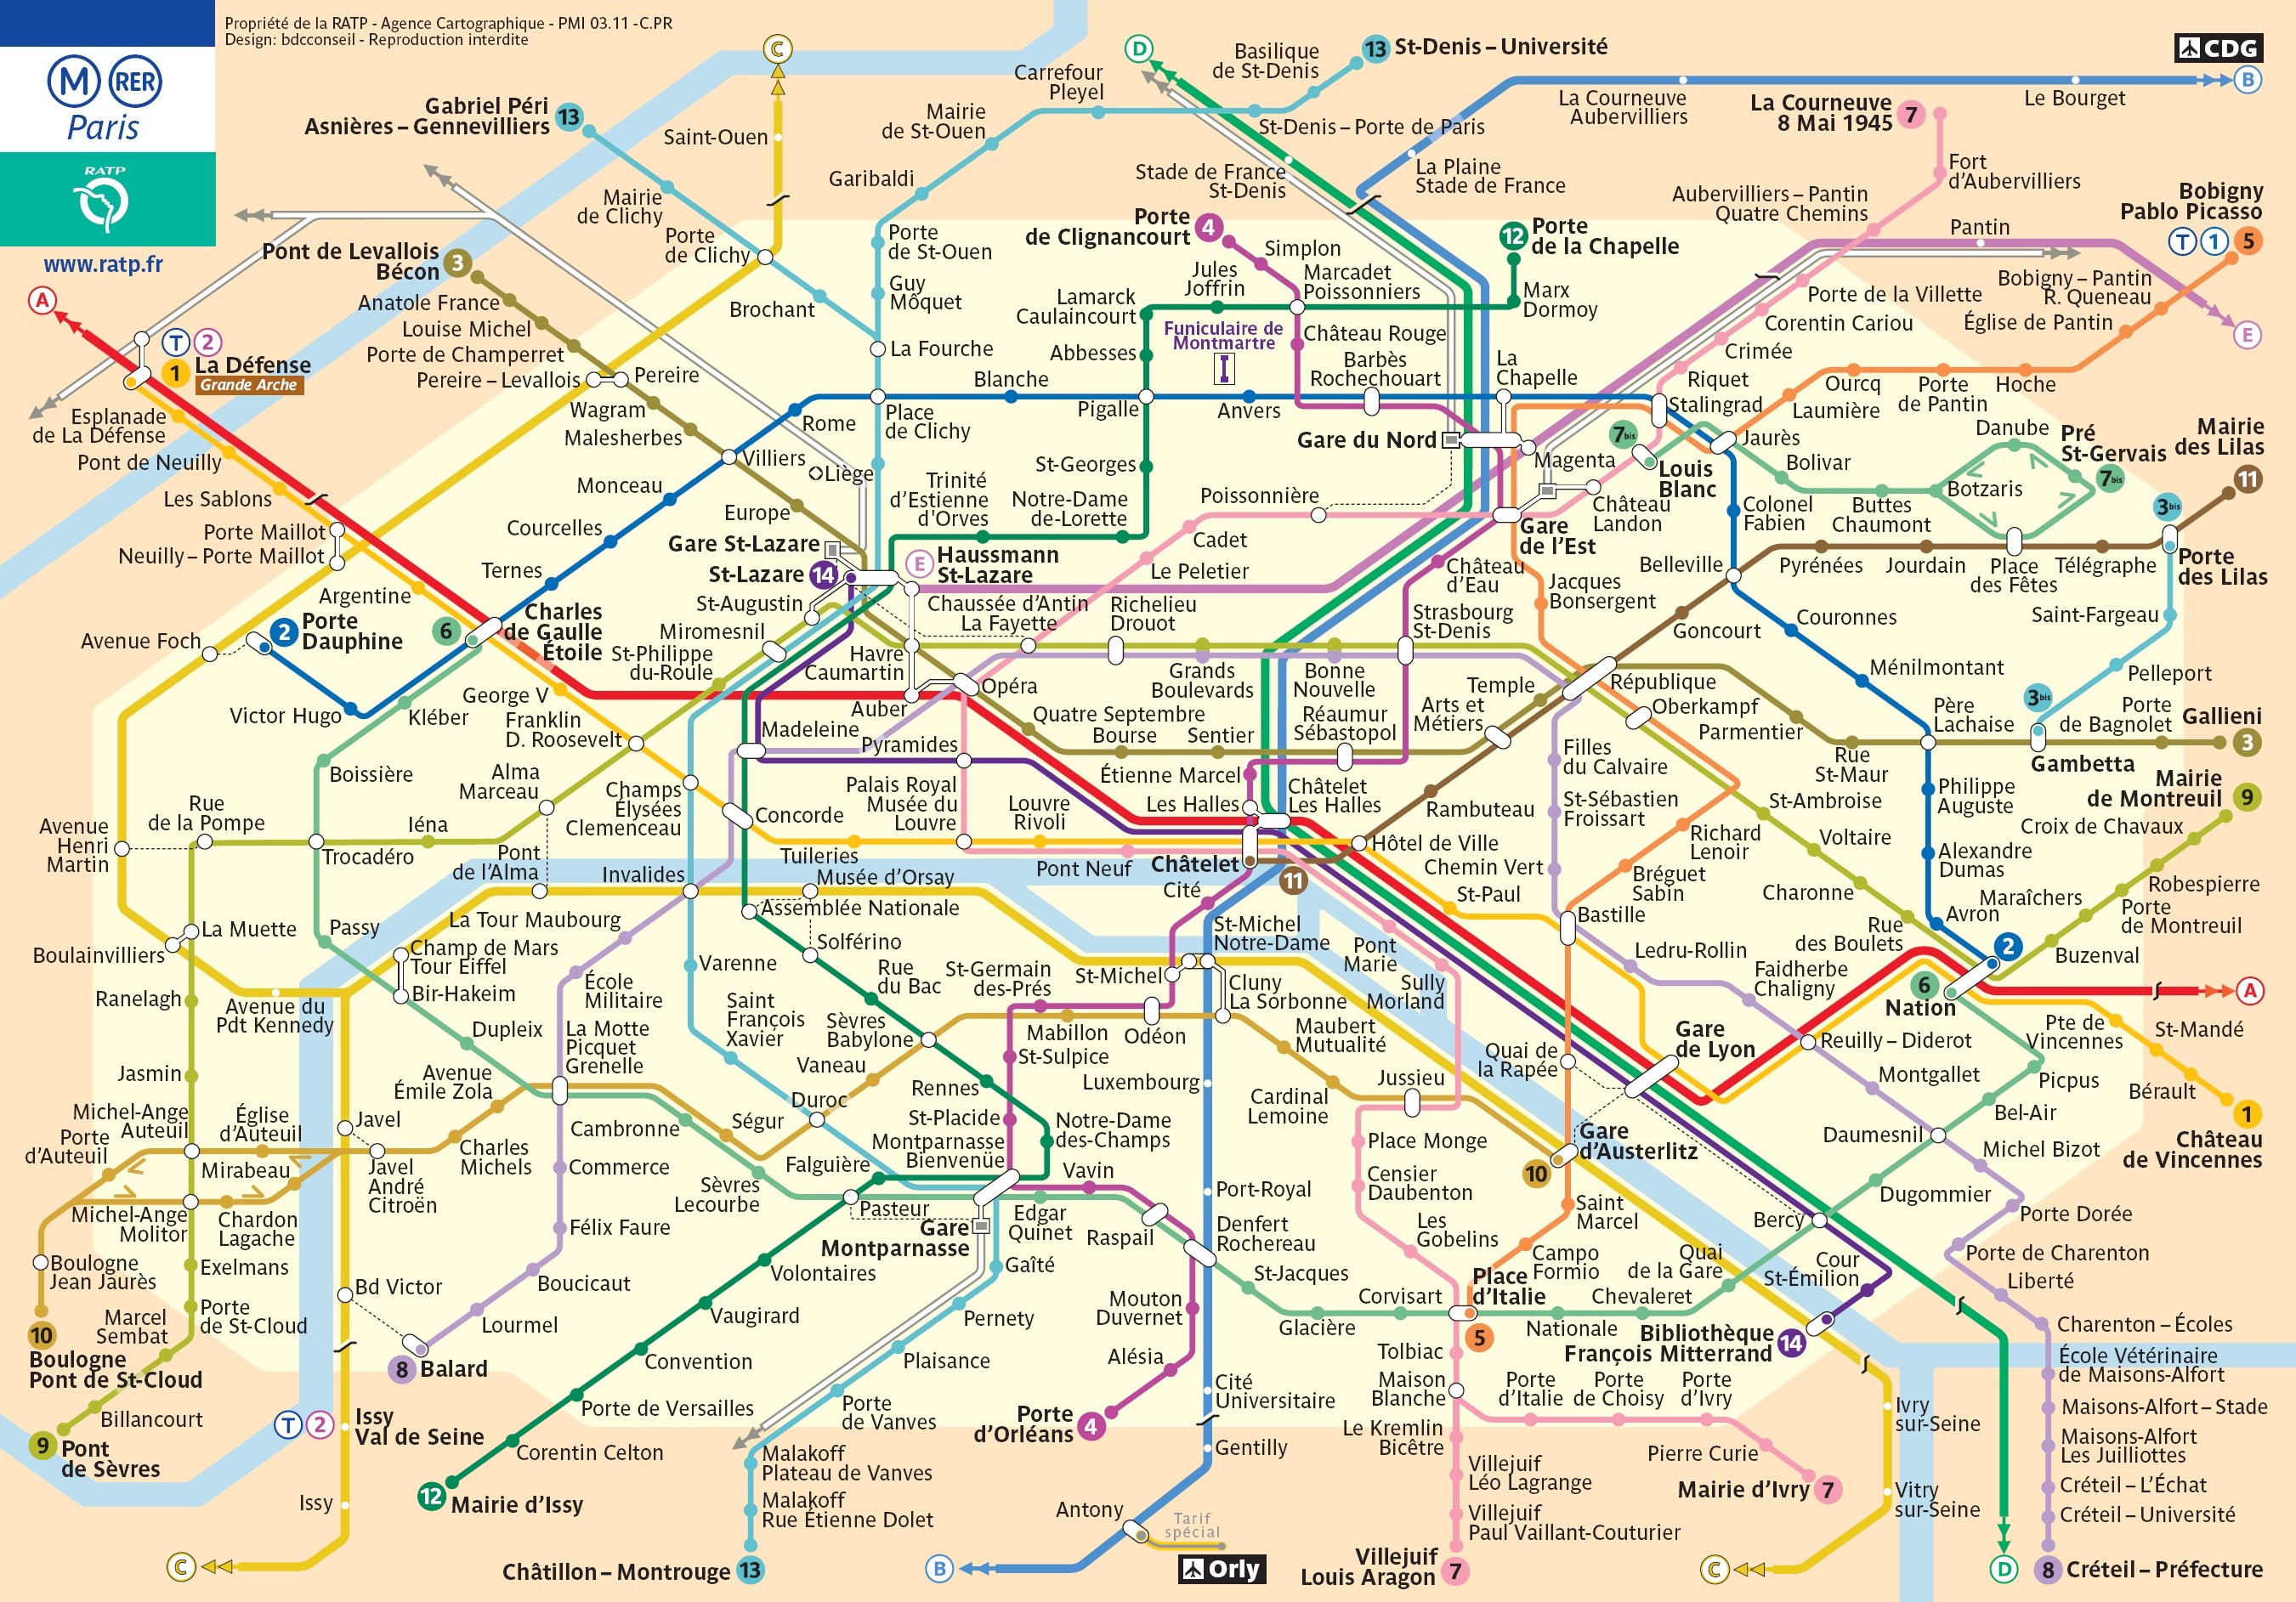 France Subway Map Pdf